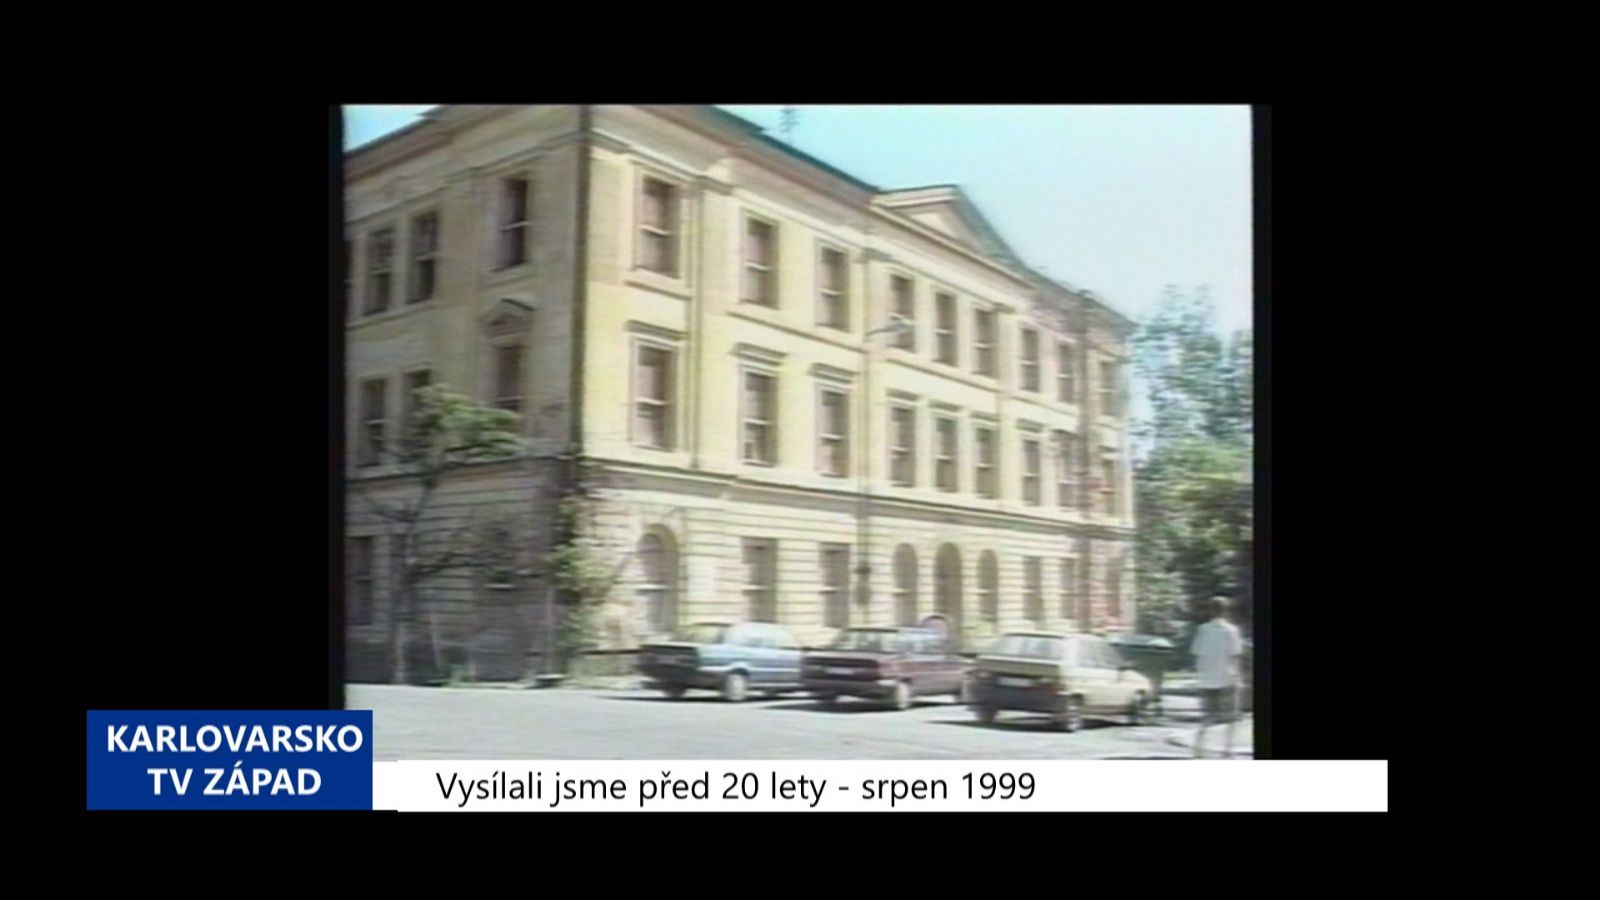 1999 - Cheb: Rudolfinum, zimák a vily (TV Západ)